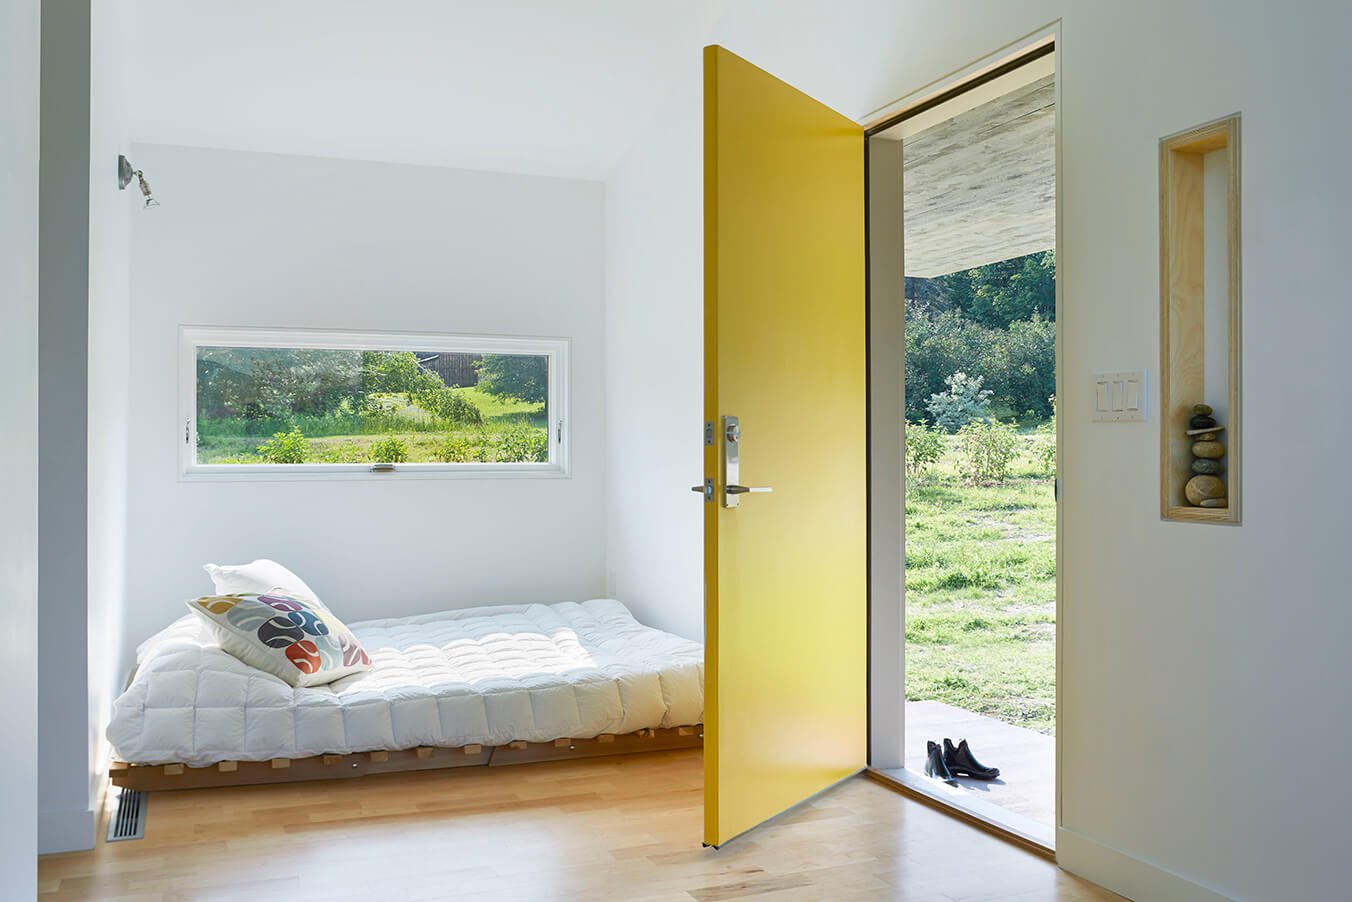 Home with Marvin Window and open Yellow door